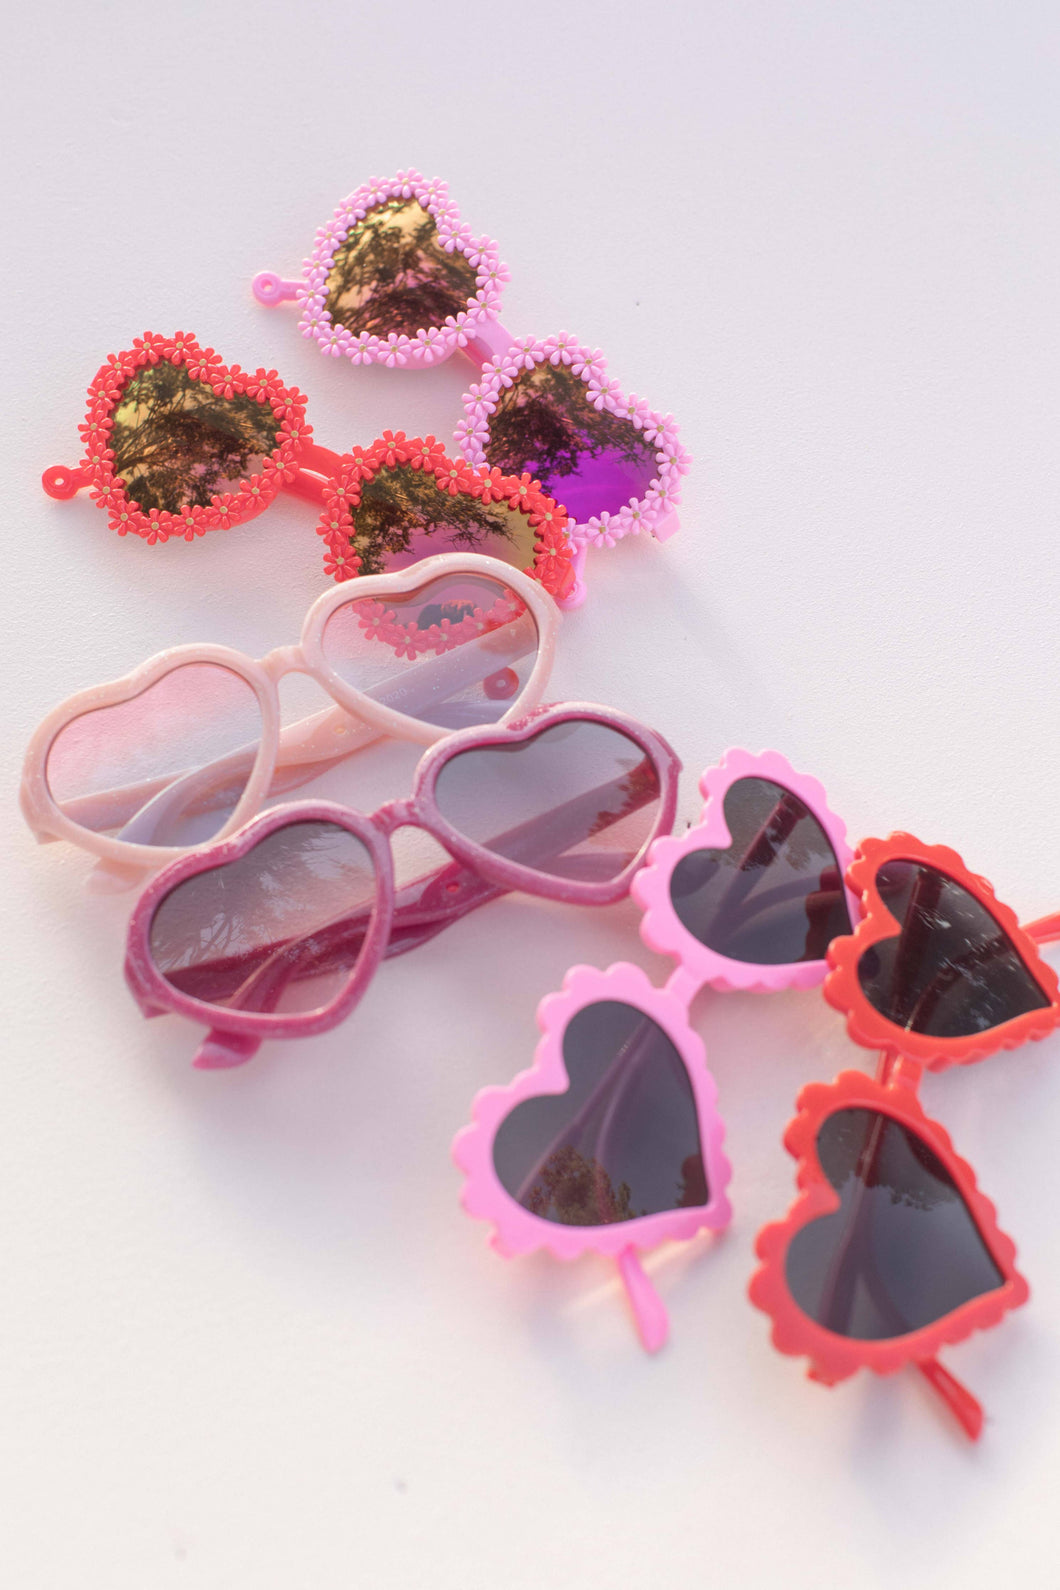 Kids Heart Sunglasses